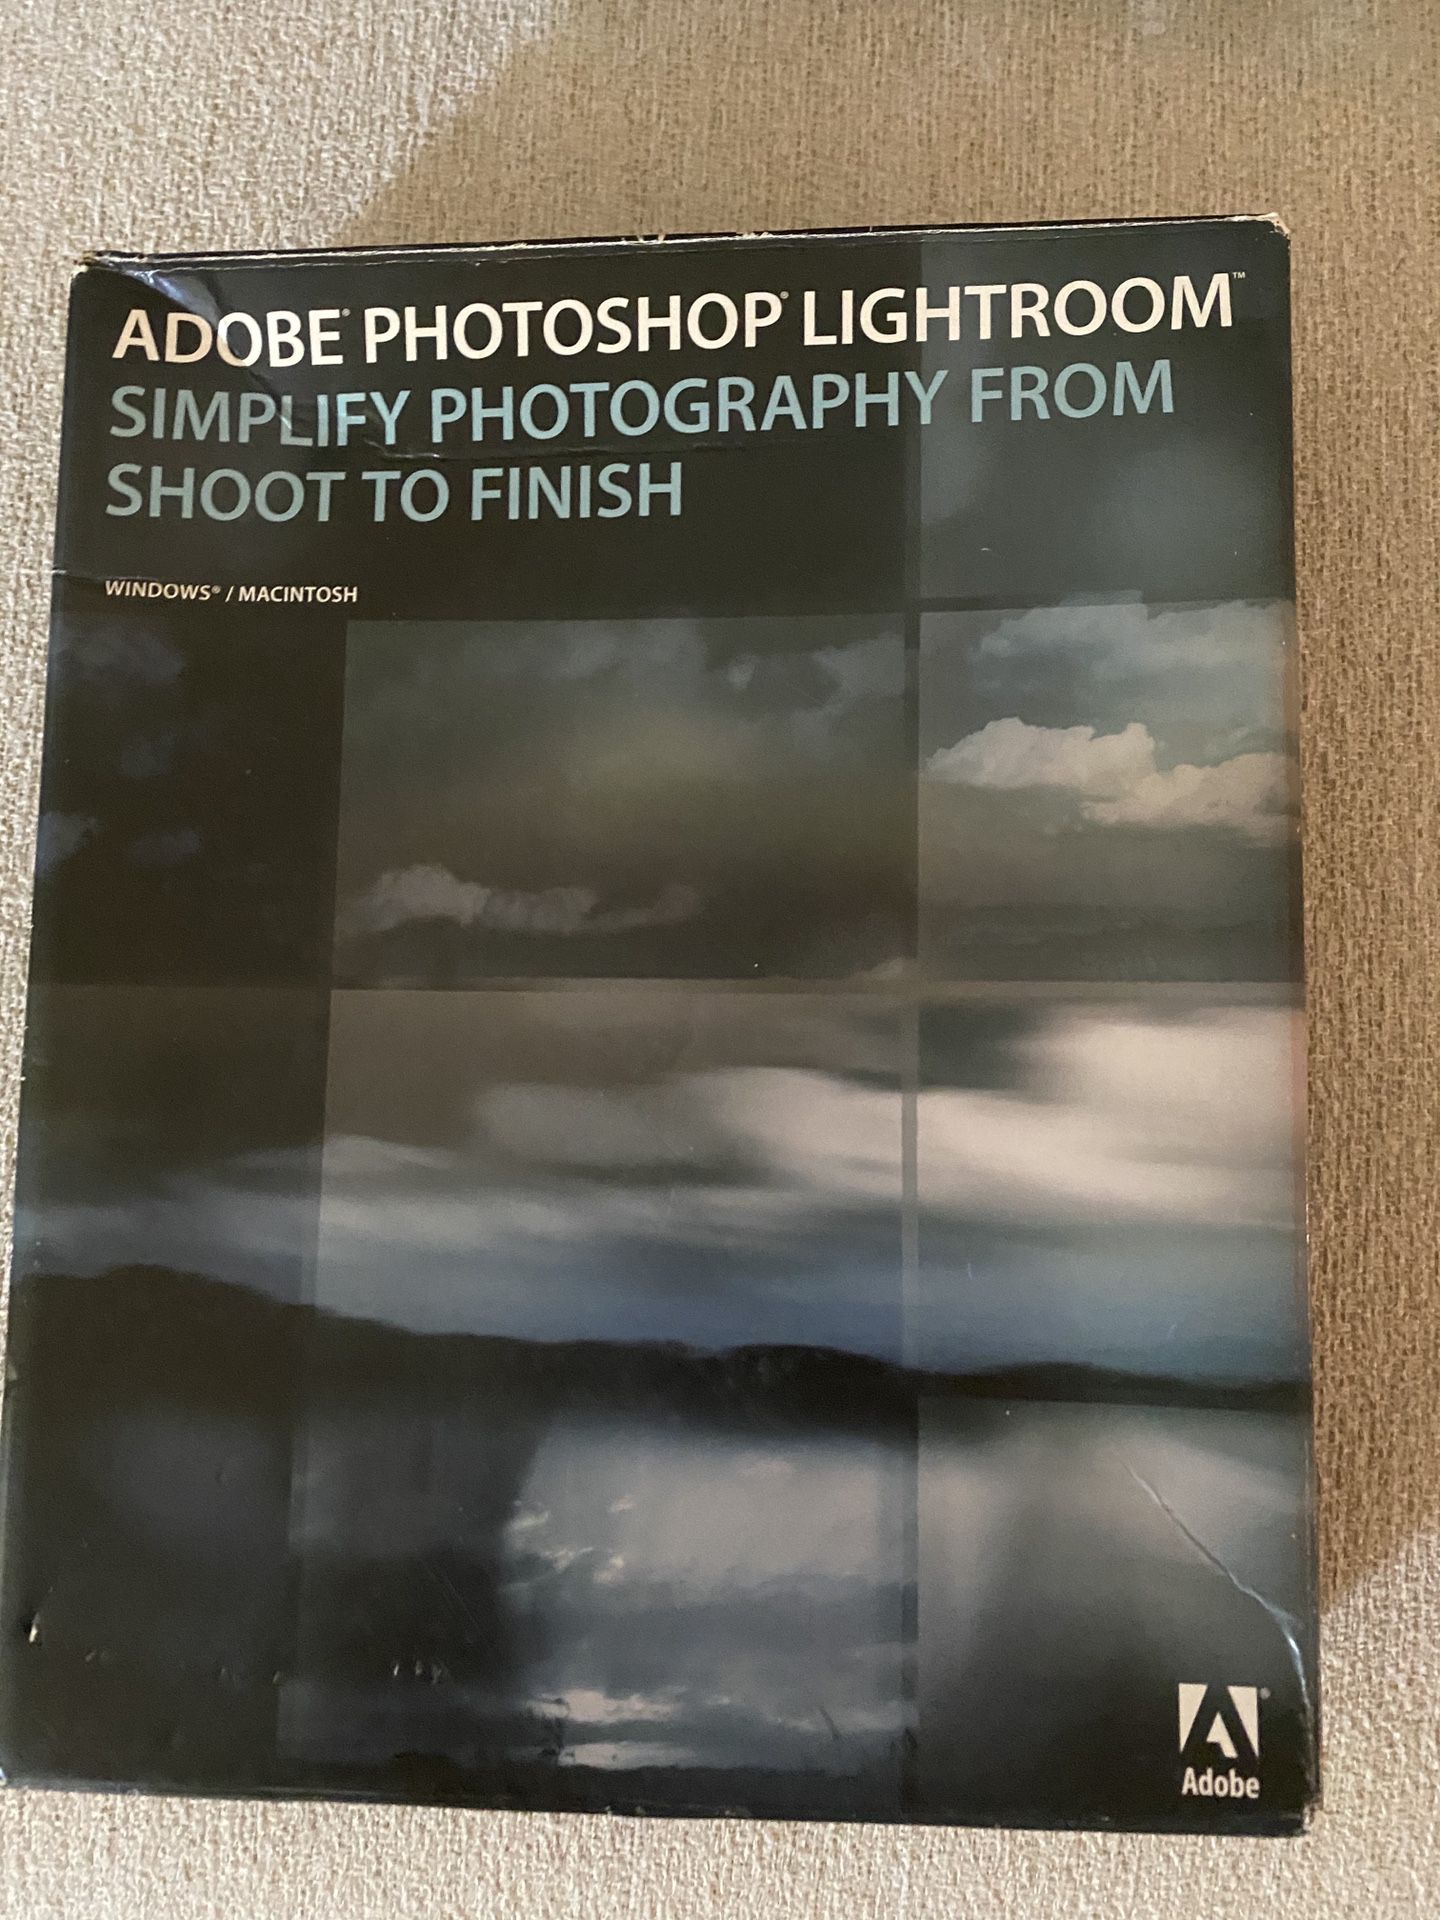 Adobe photoshop Lightroom